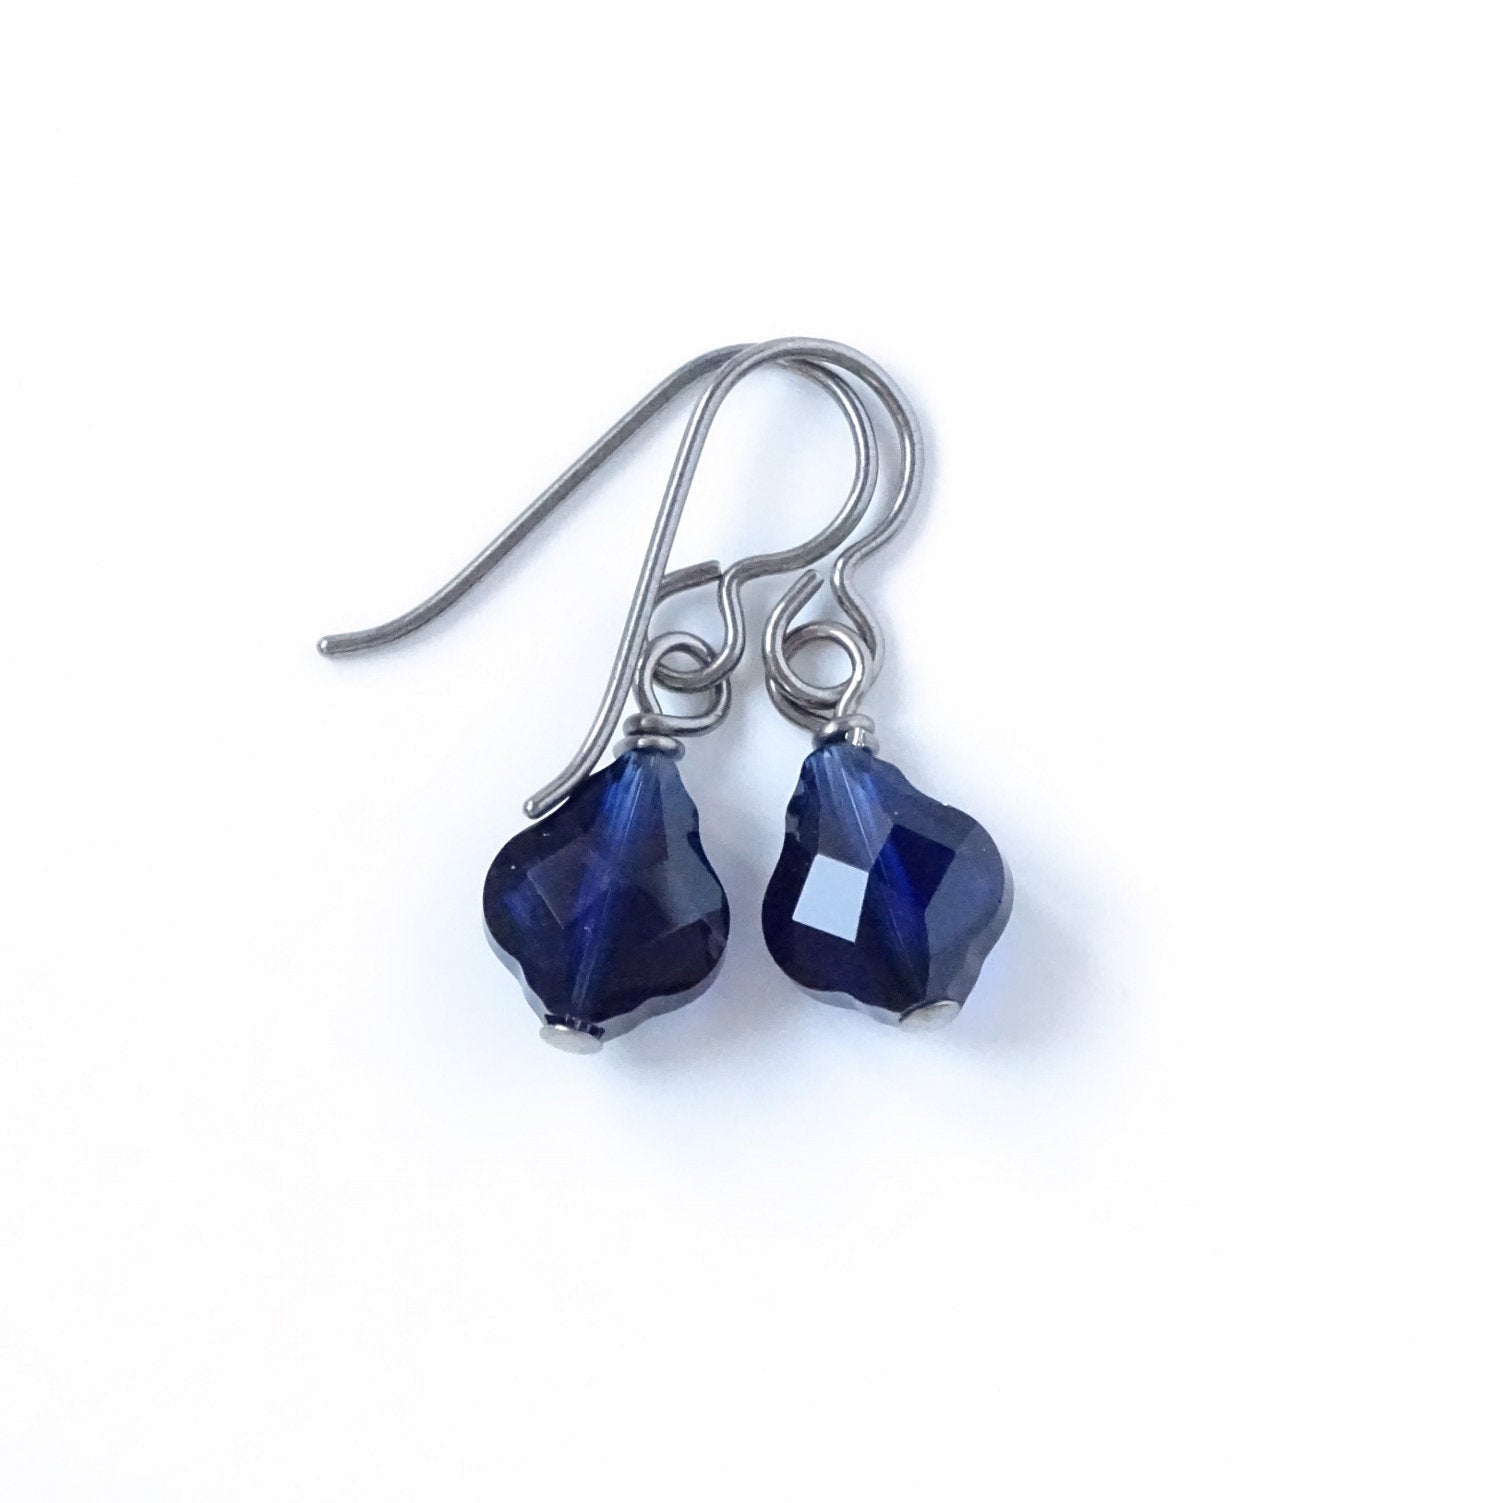 Blue Baroque Crystal Titanium Earrings, Dark Indigo Swarovski Crystal, Hypoallergenic Nickel Free Niobium Earrings for Sensitive Ears